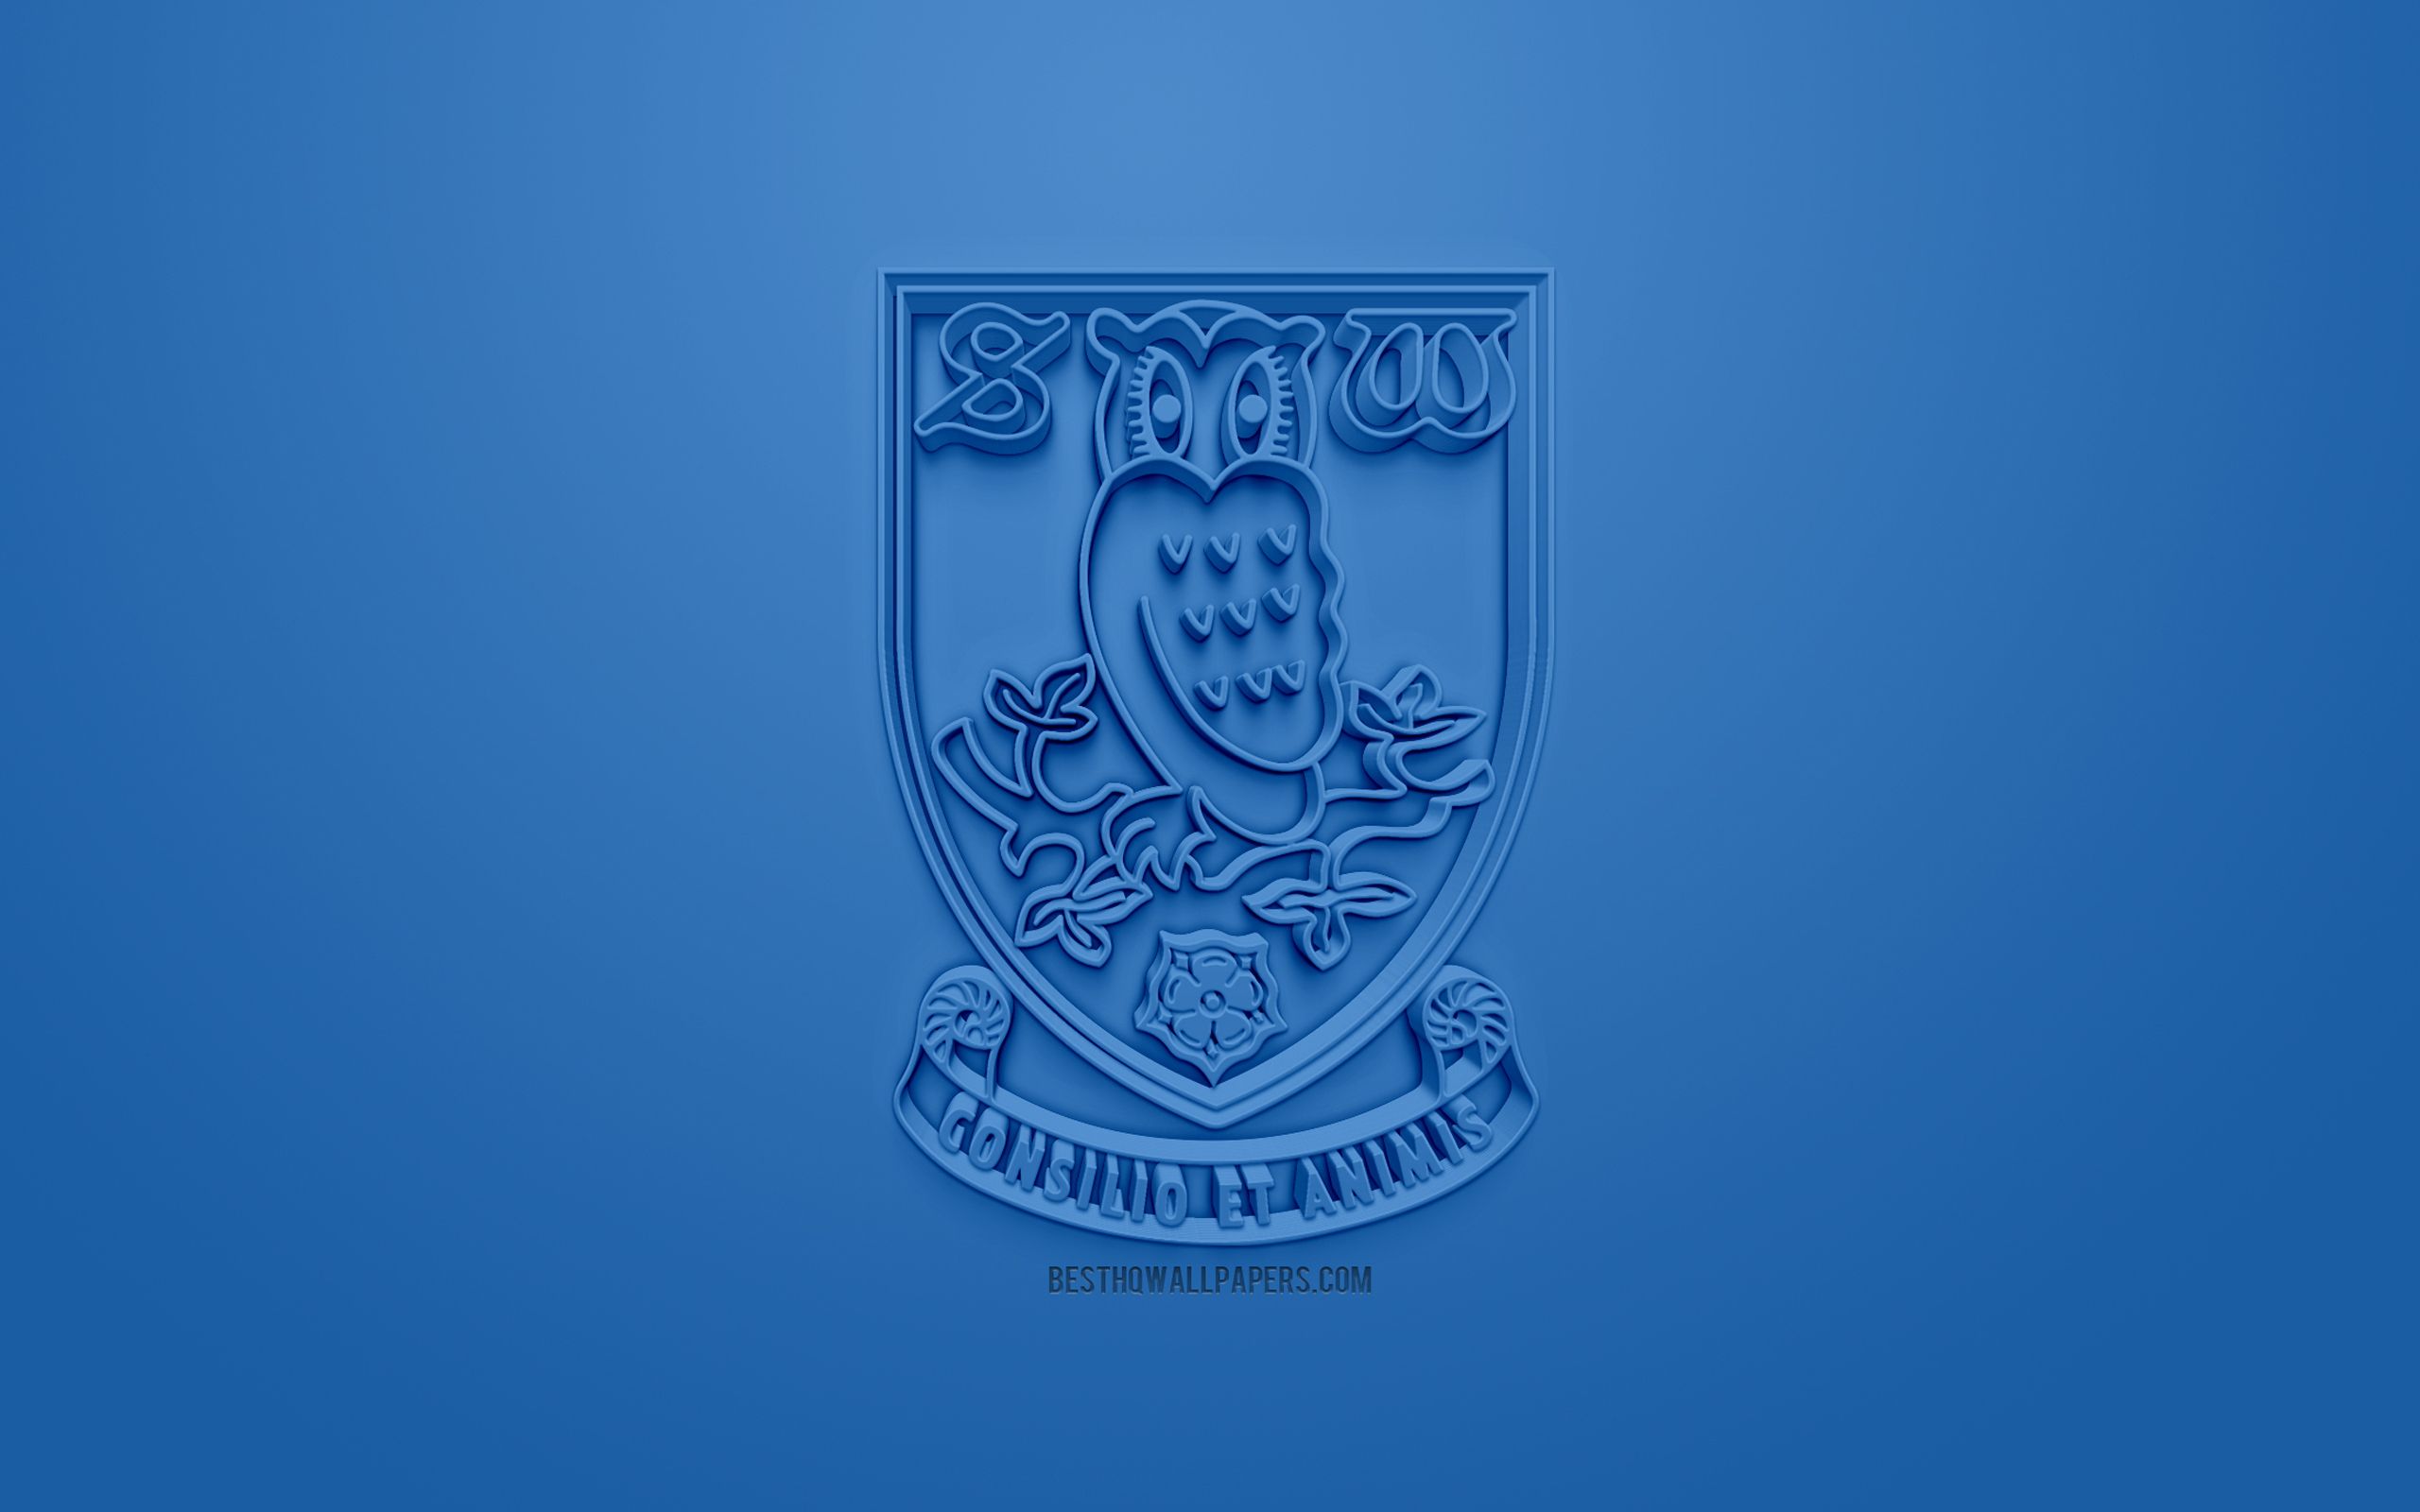 Download wallpaper Sheffield Wednesday FC, creative 3D logo, blue